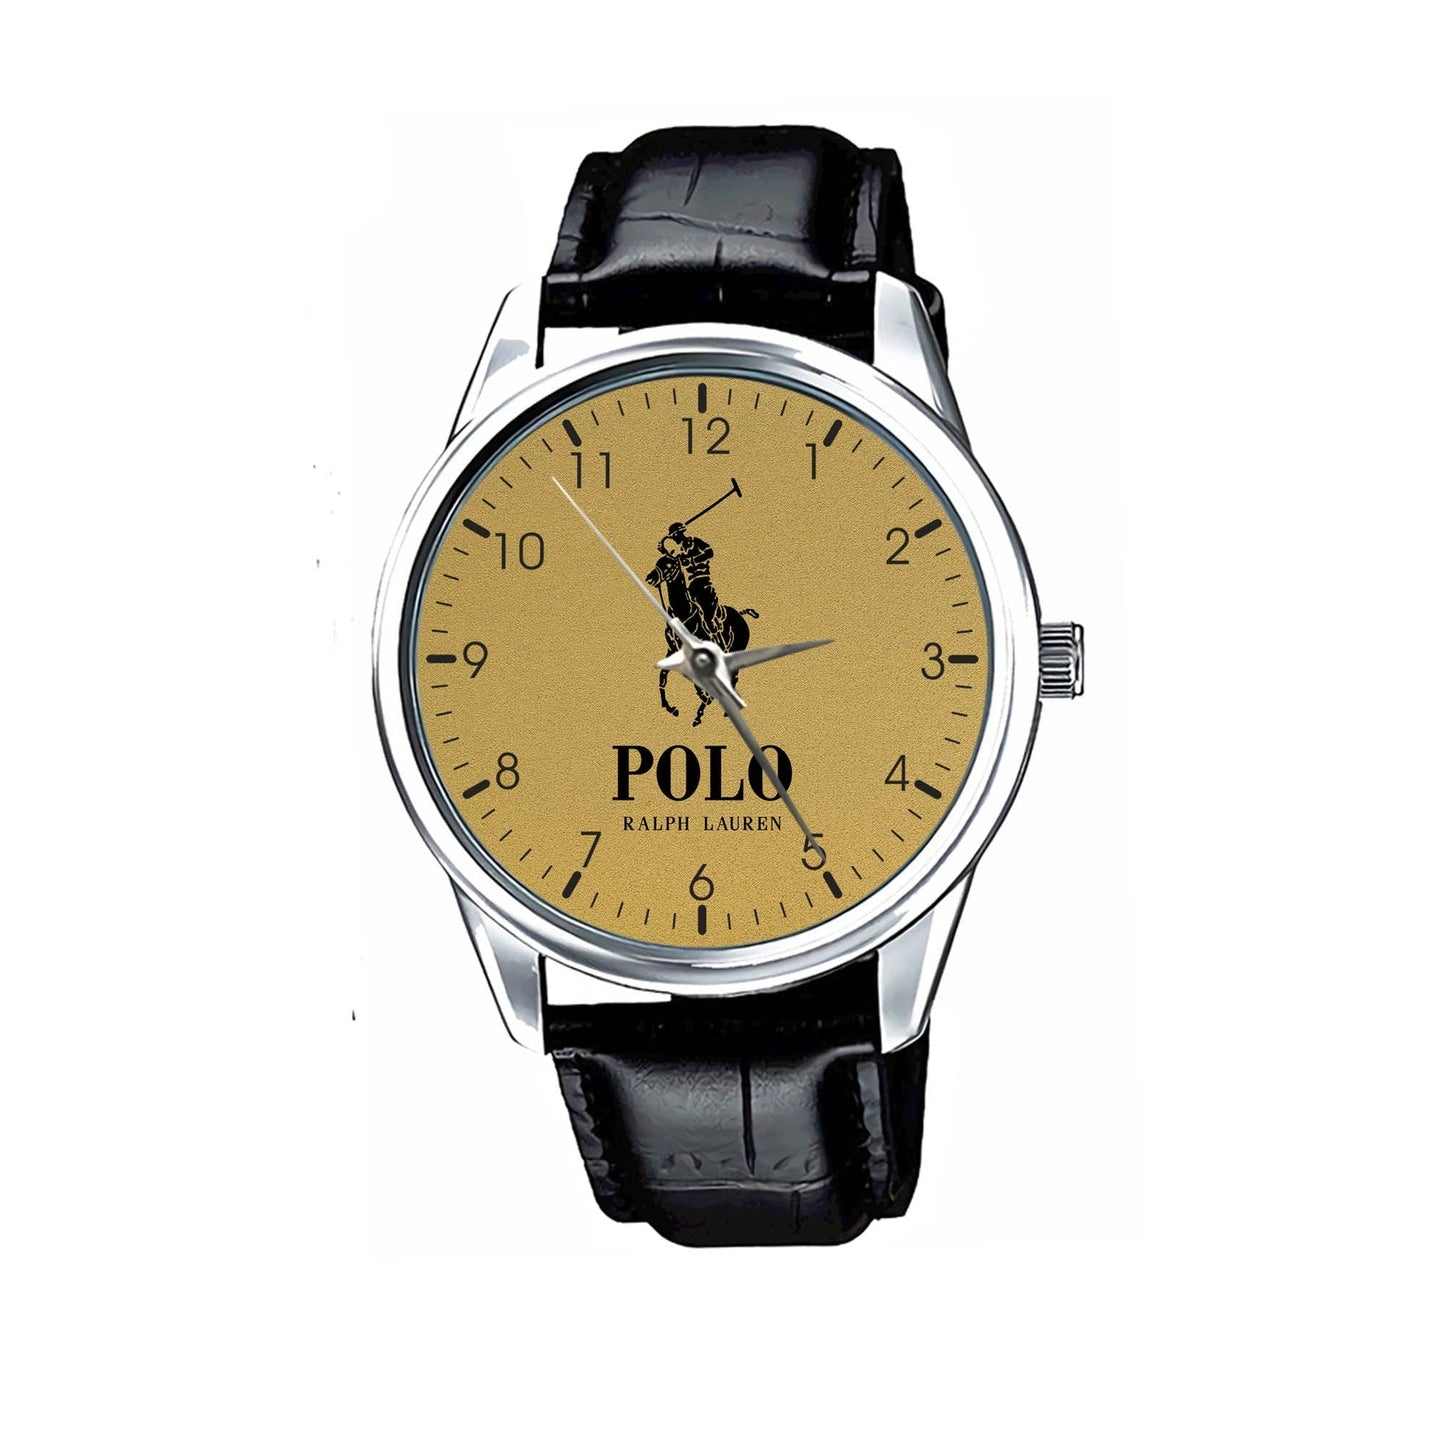 Polo Ralph Lauren Watches KP642